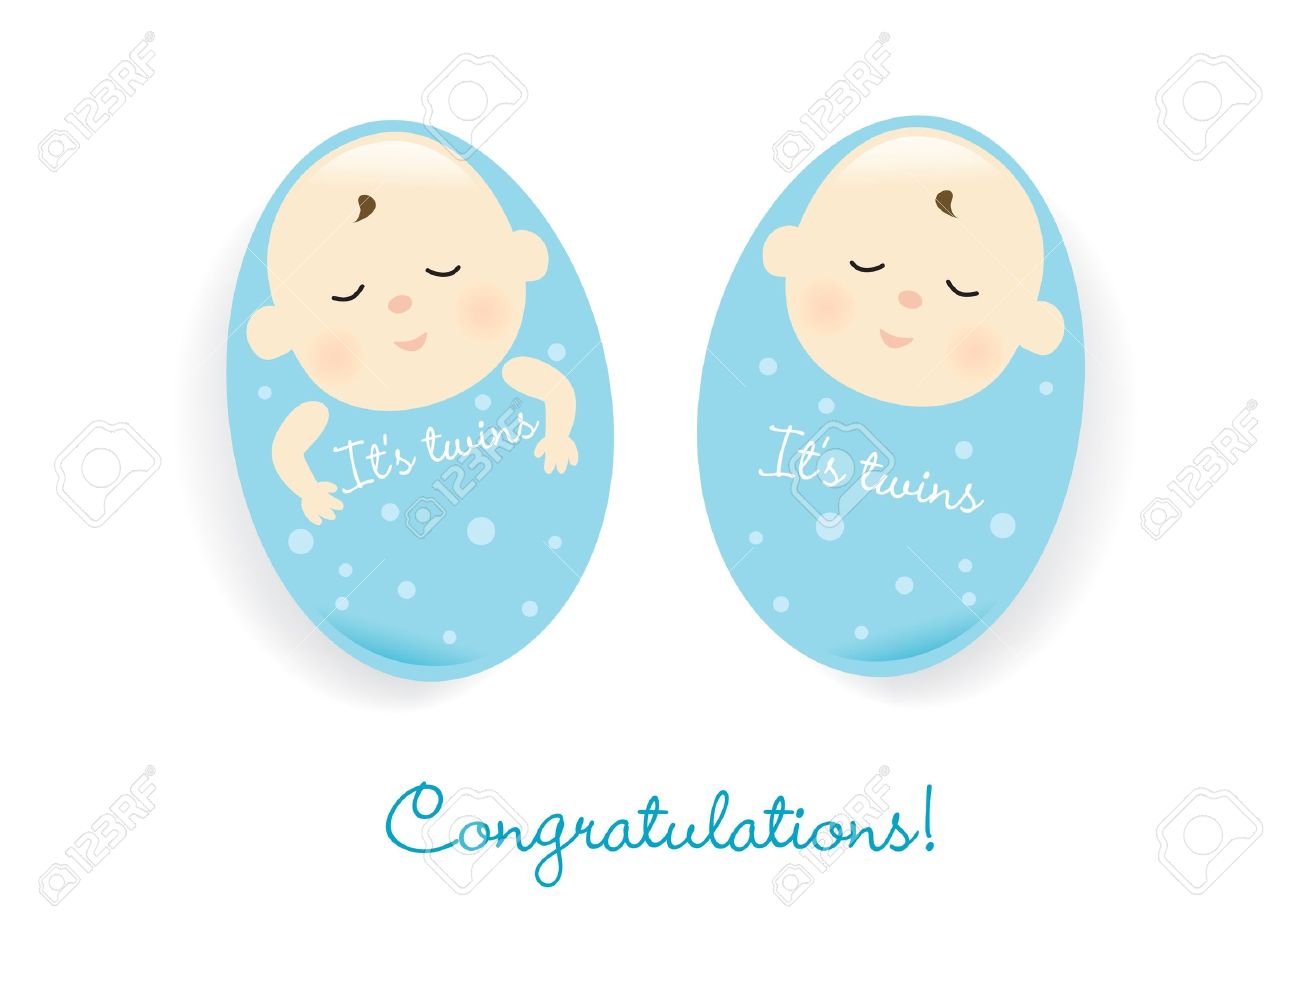 Twin Baby Boy Congratulations PNG - 165466